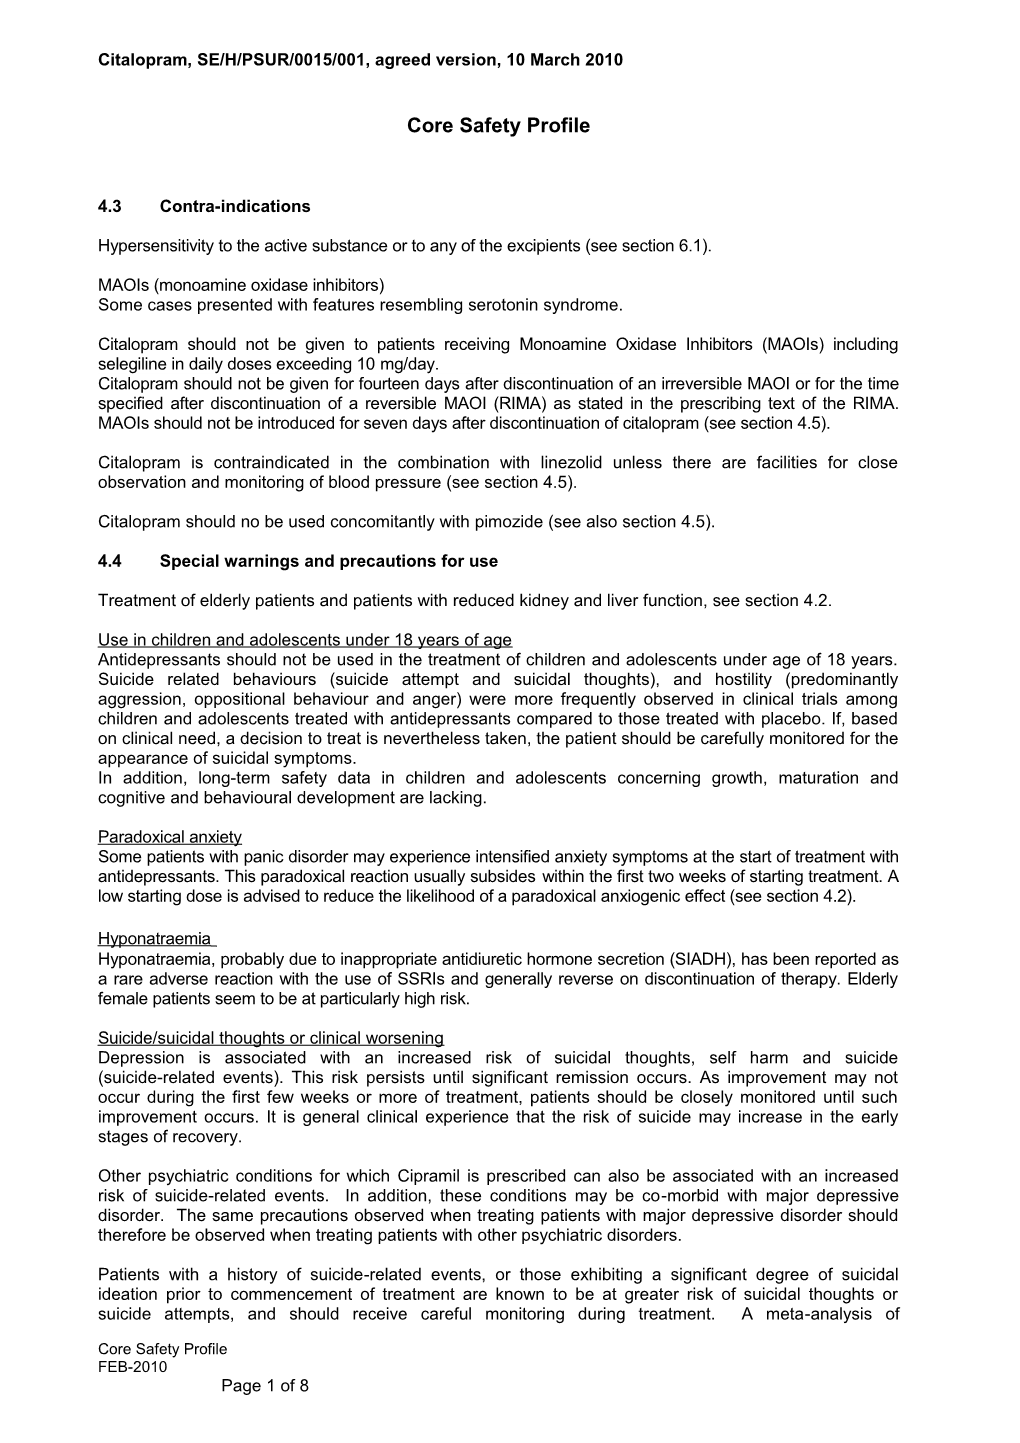 Citalopram, SE/H/PSUR/0015/001, Agreed Version, 10 March 2010